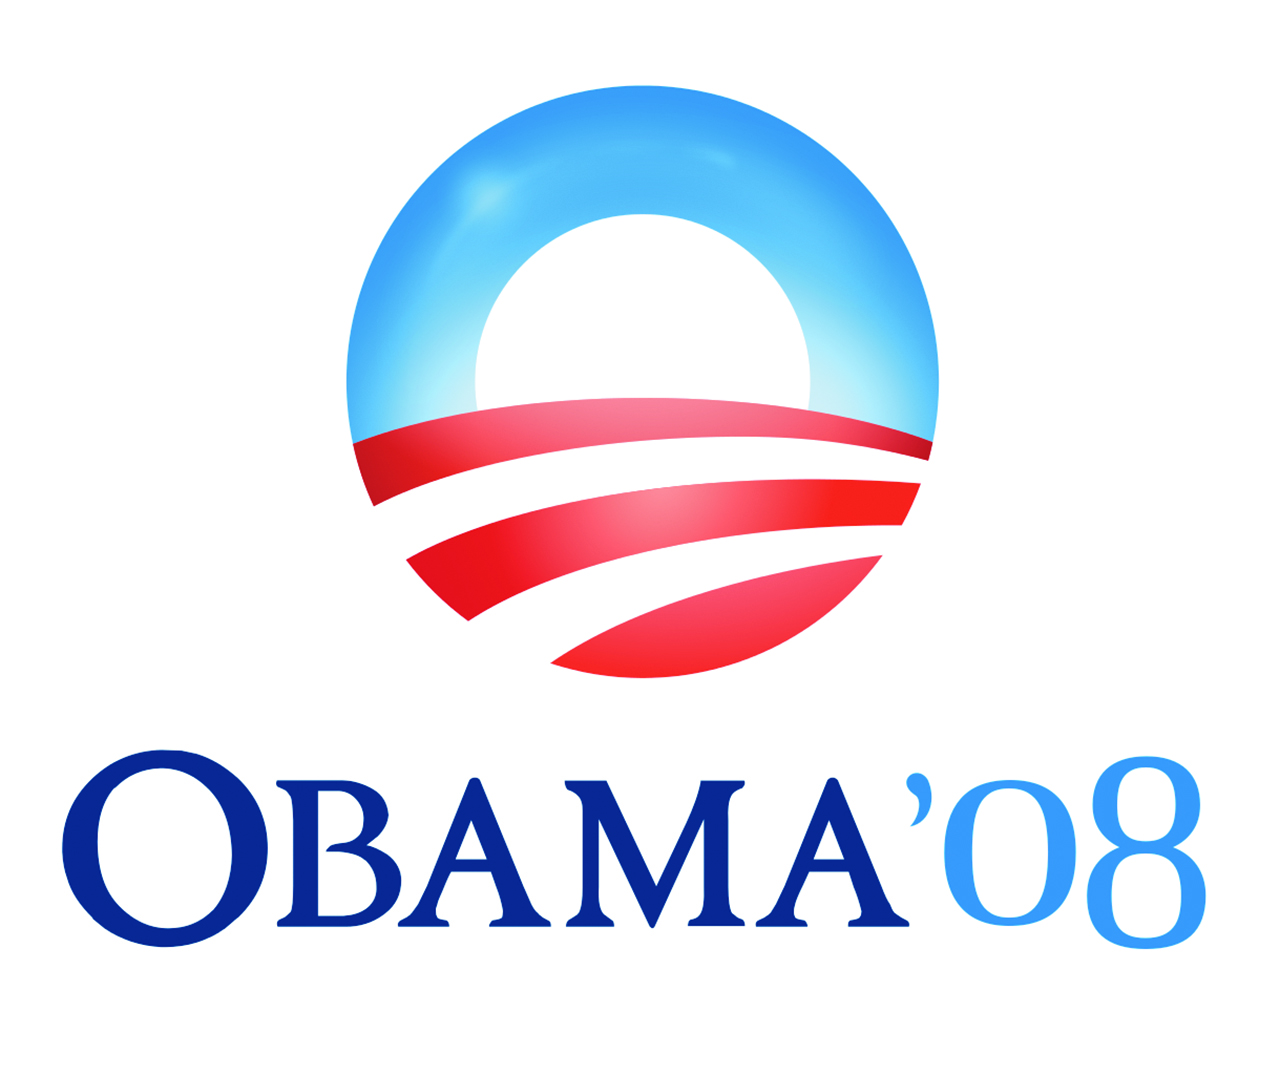 President Barack Obama's 2008 sunrise logo